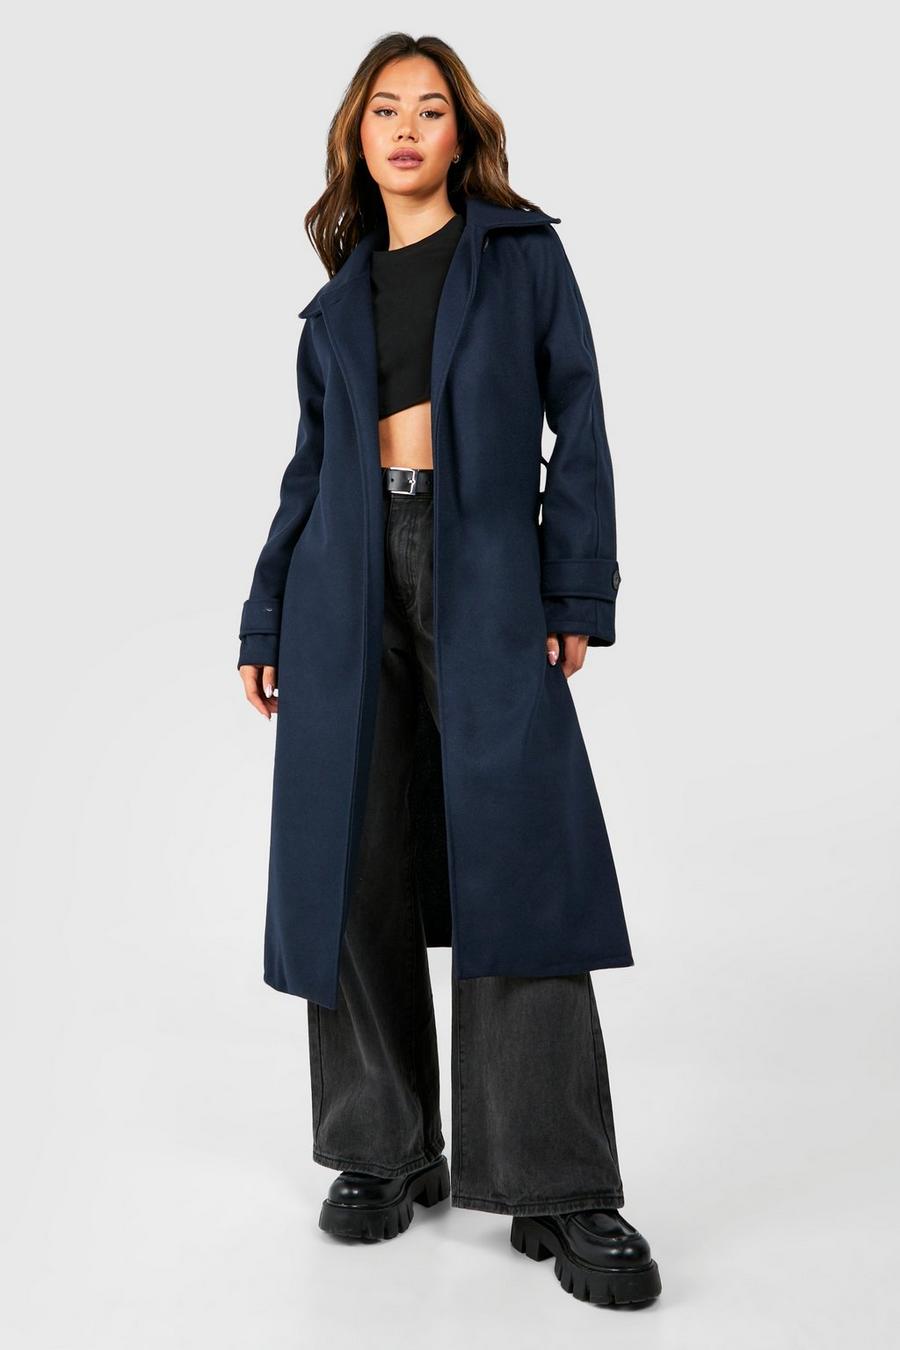 Cappotto effetto lana con colletto, cintura, Navy